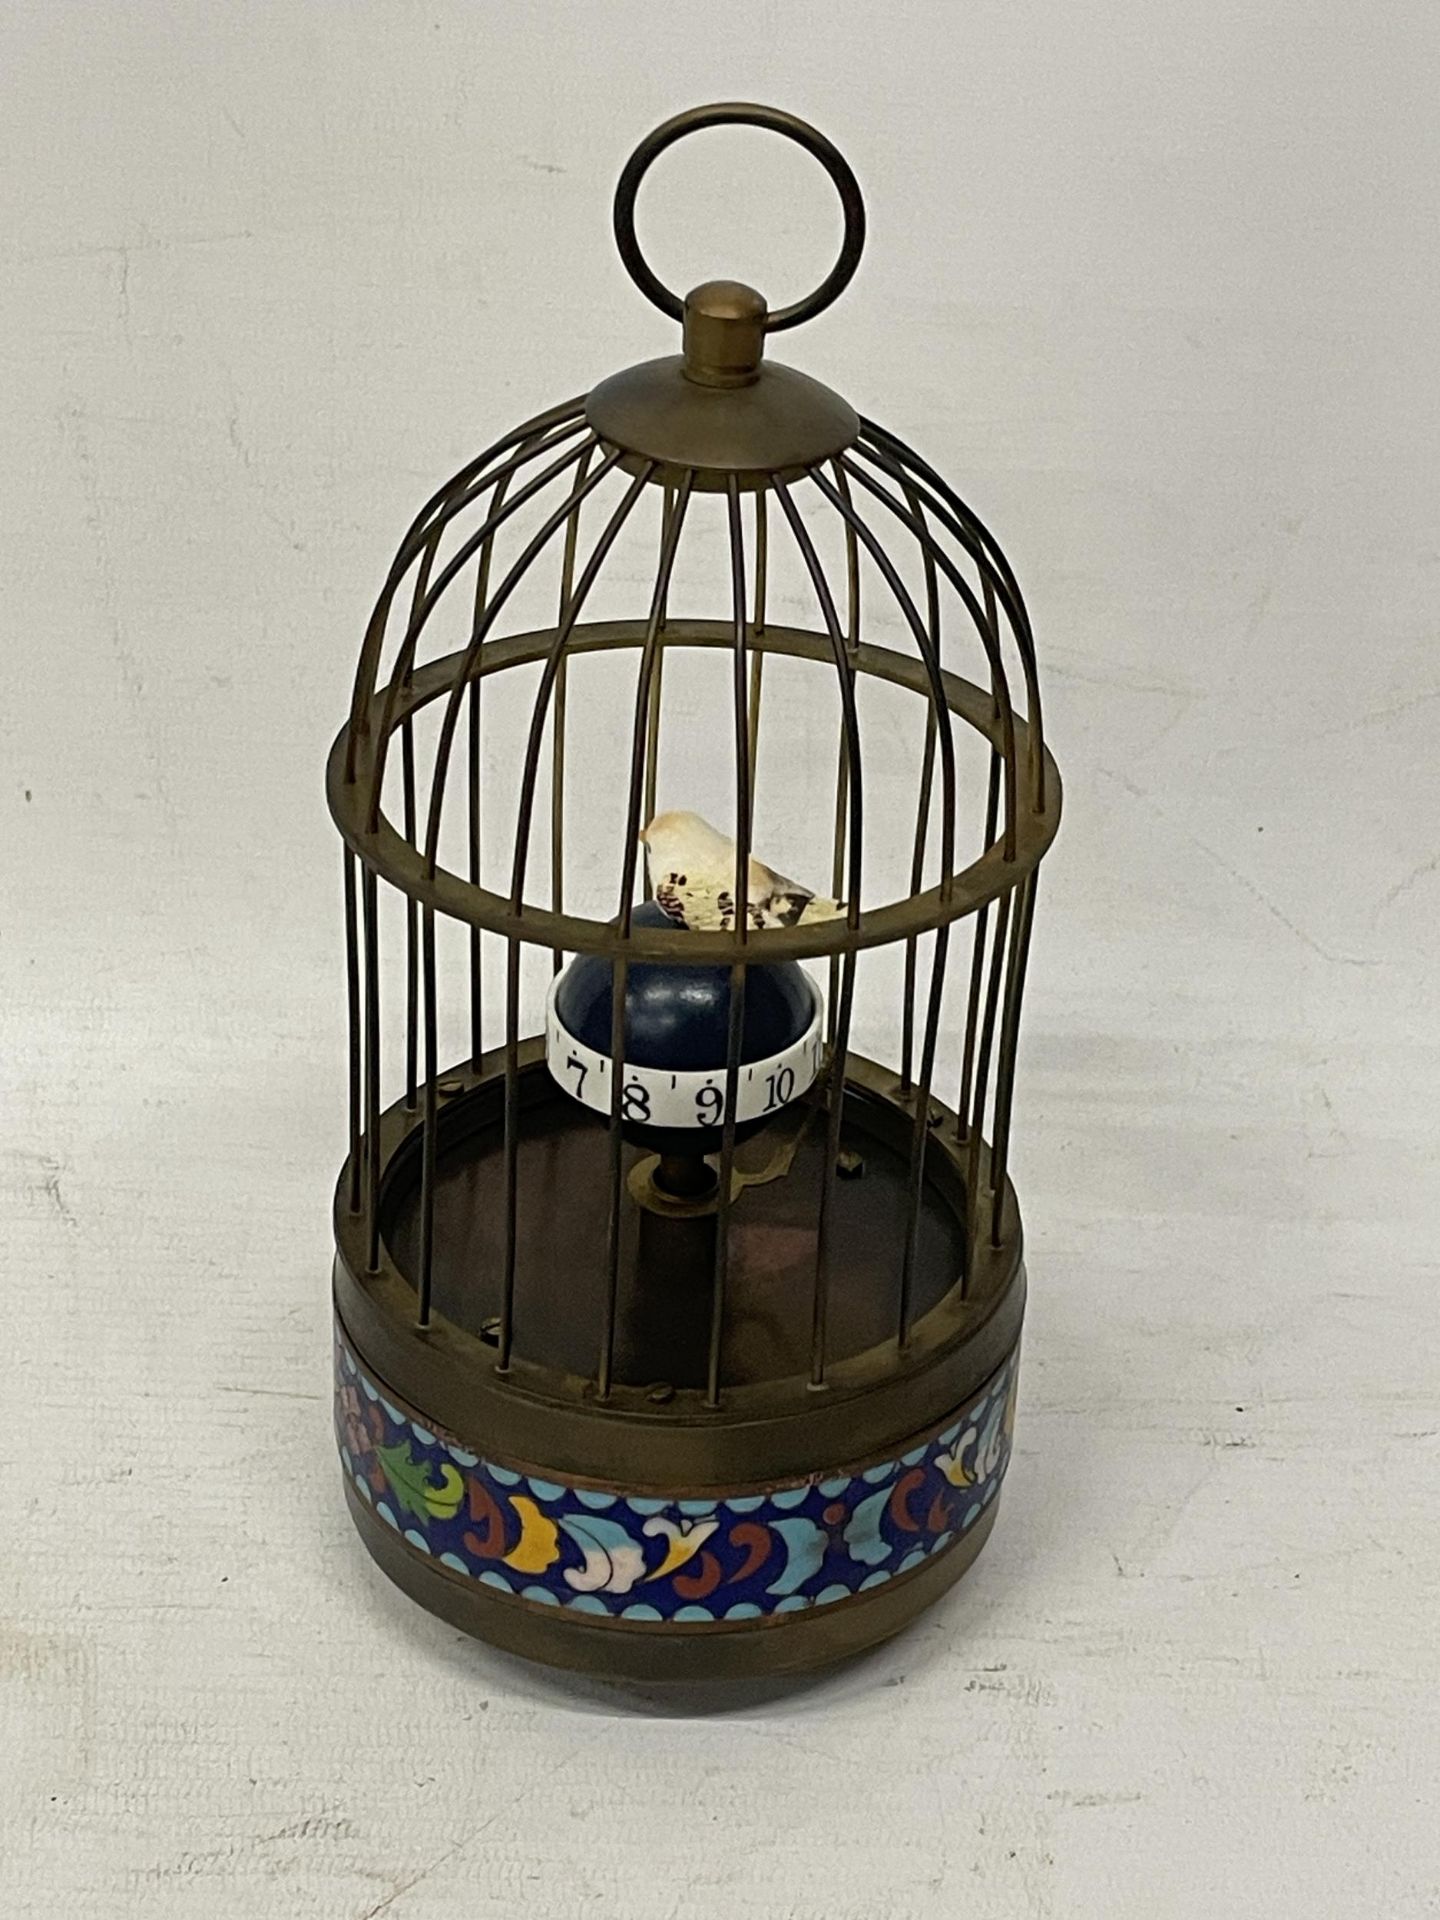 A MECHANICAL BRASS BIRD CAGE CLOCK - Image 2 of 4